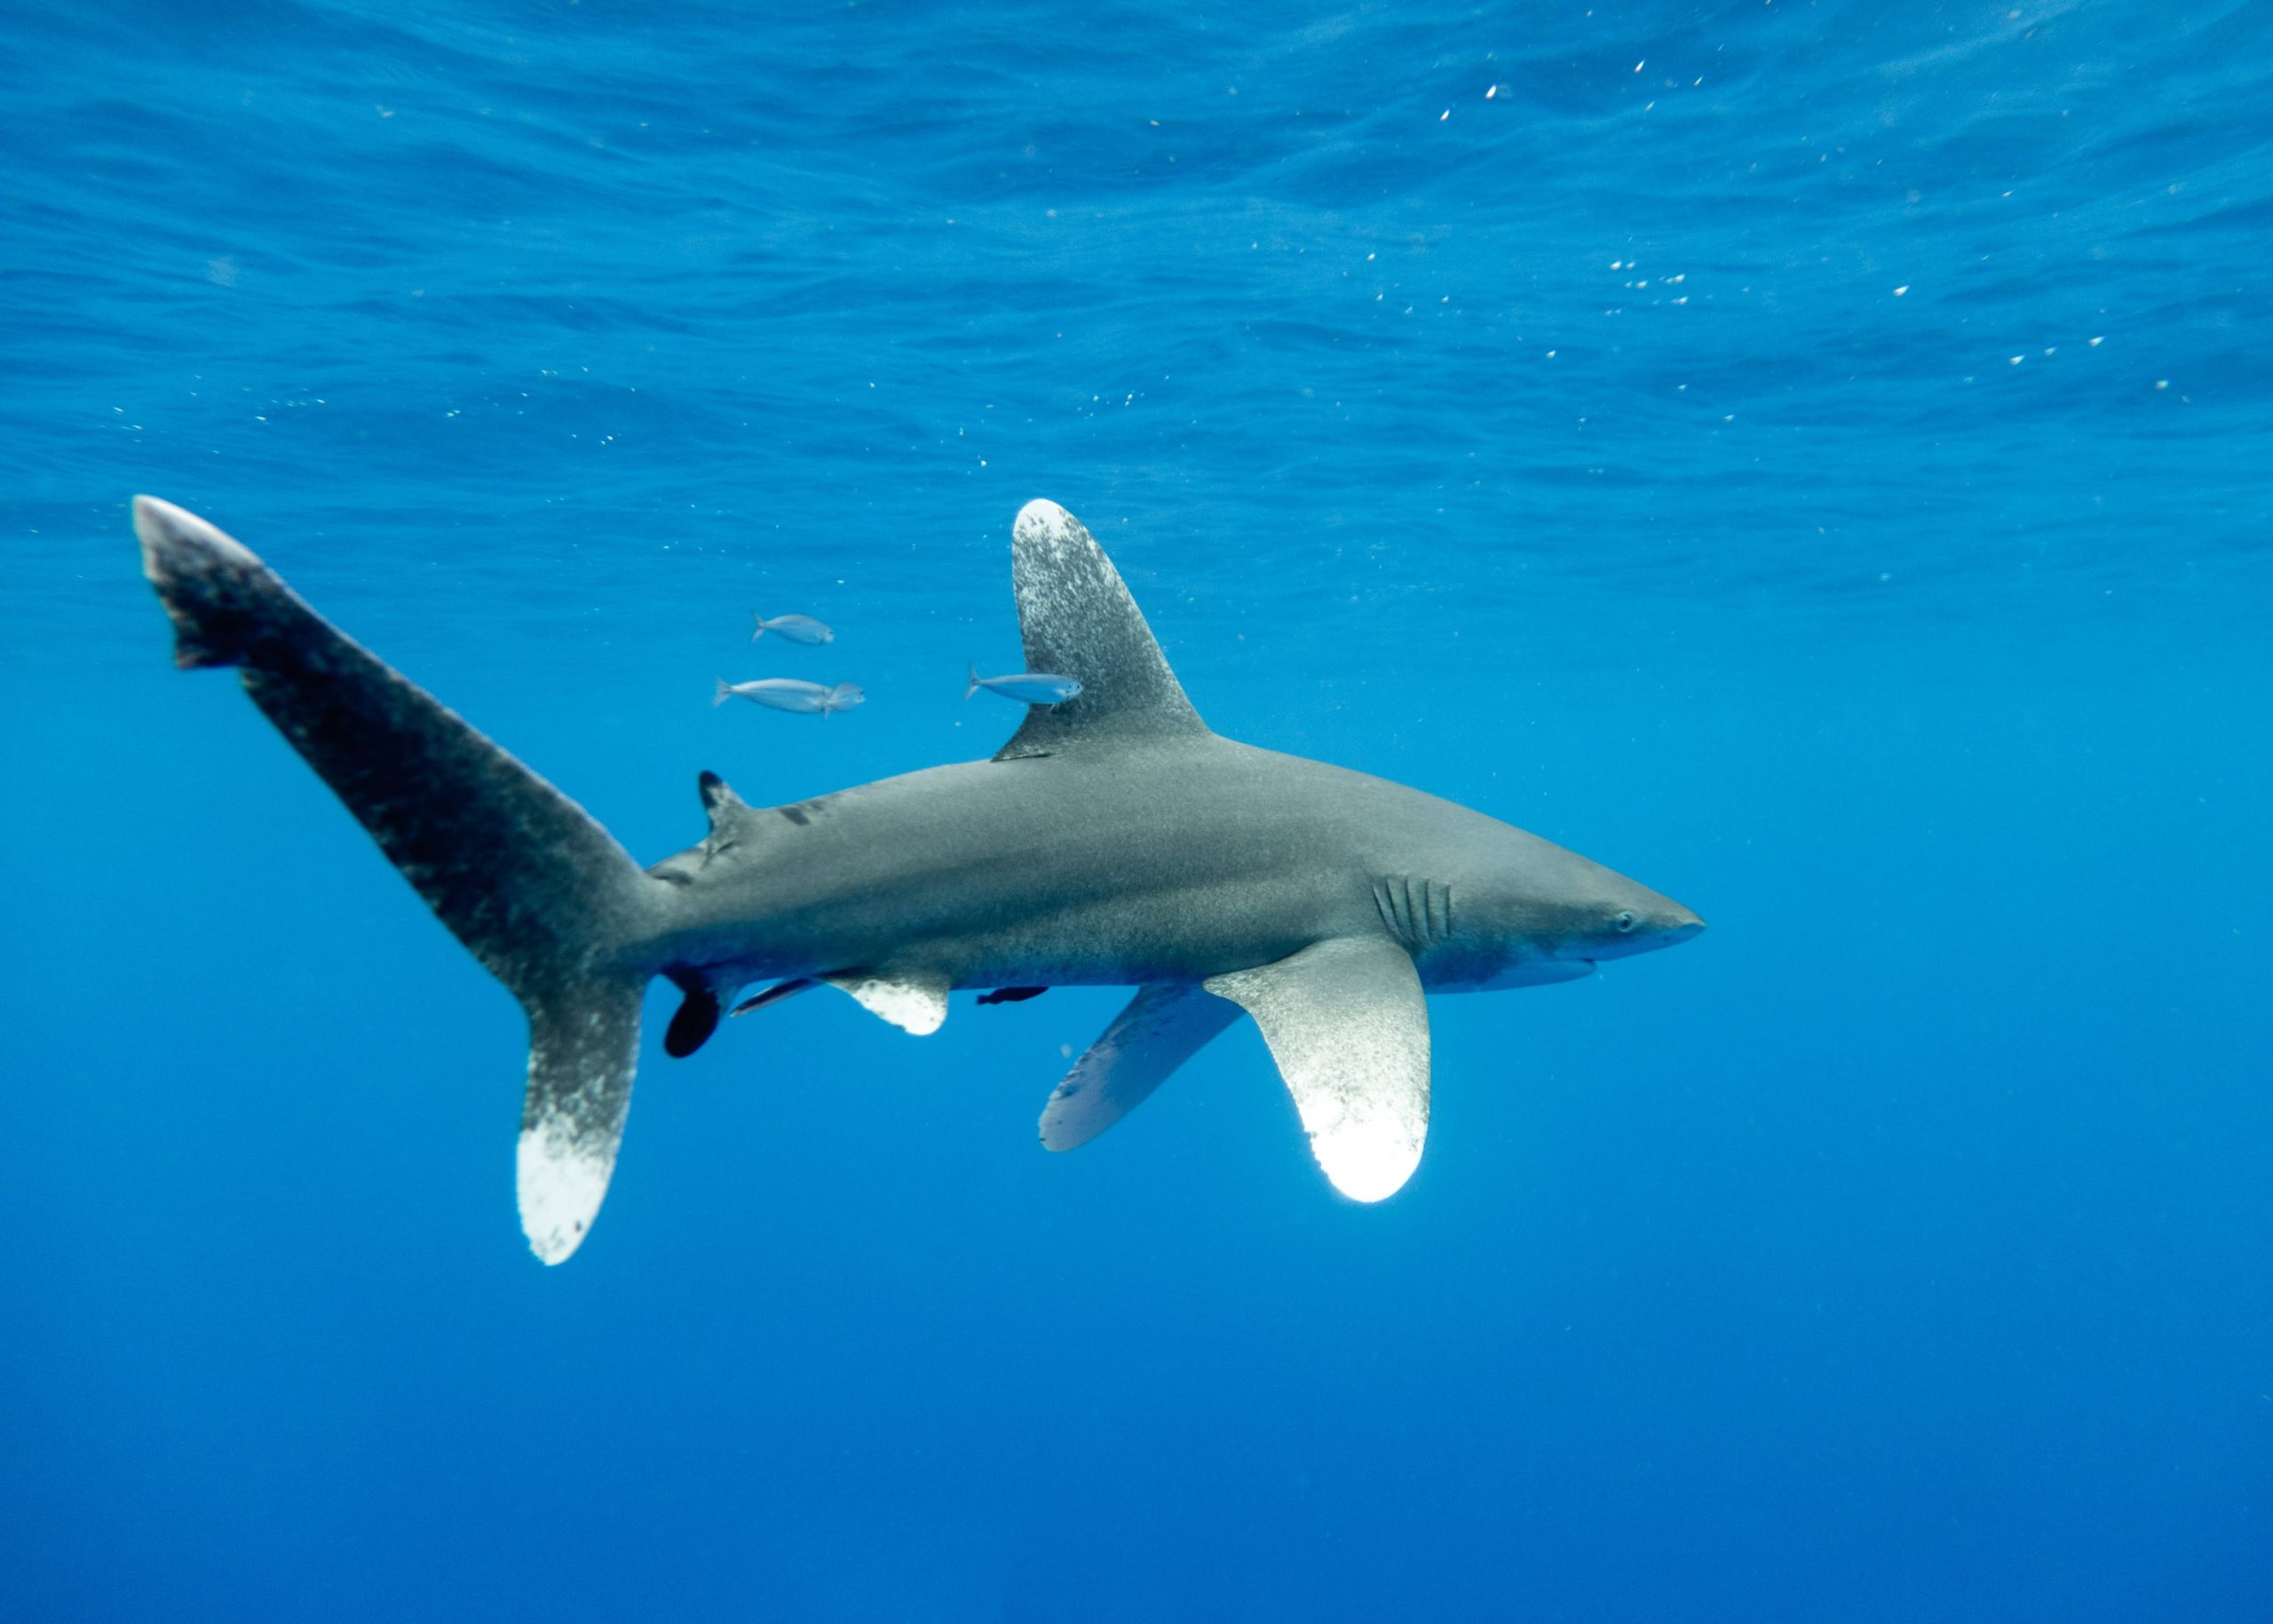 Oceanic whitetip shark swimming at the surface. PC: Brendan Talwar